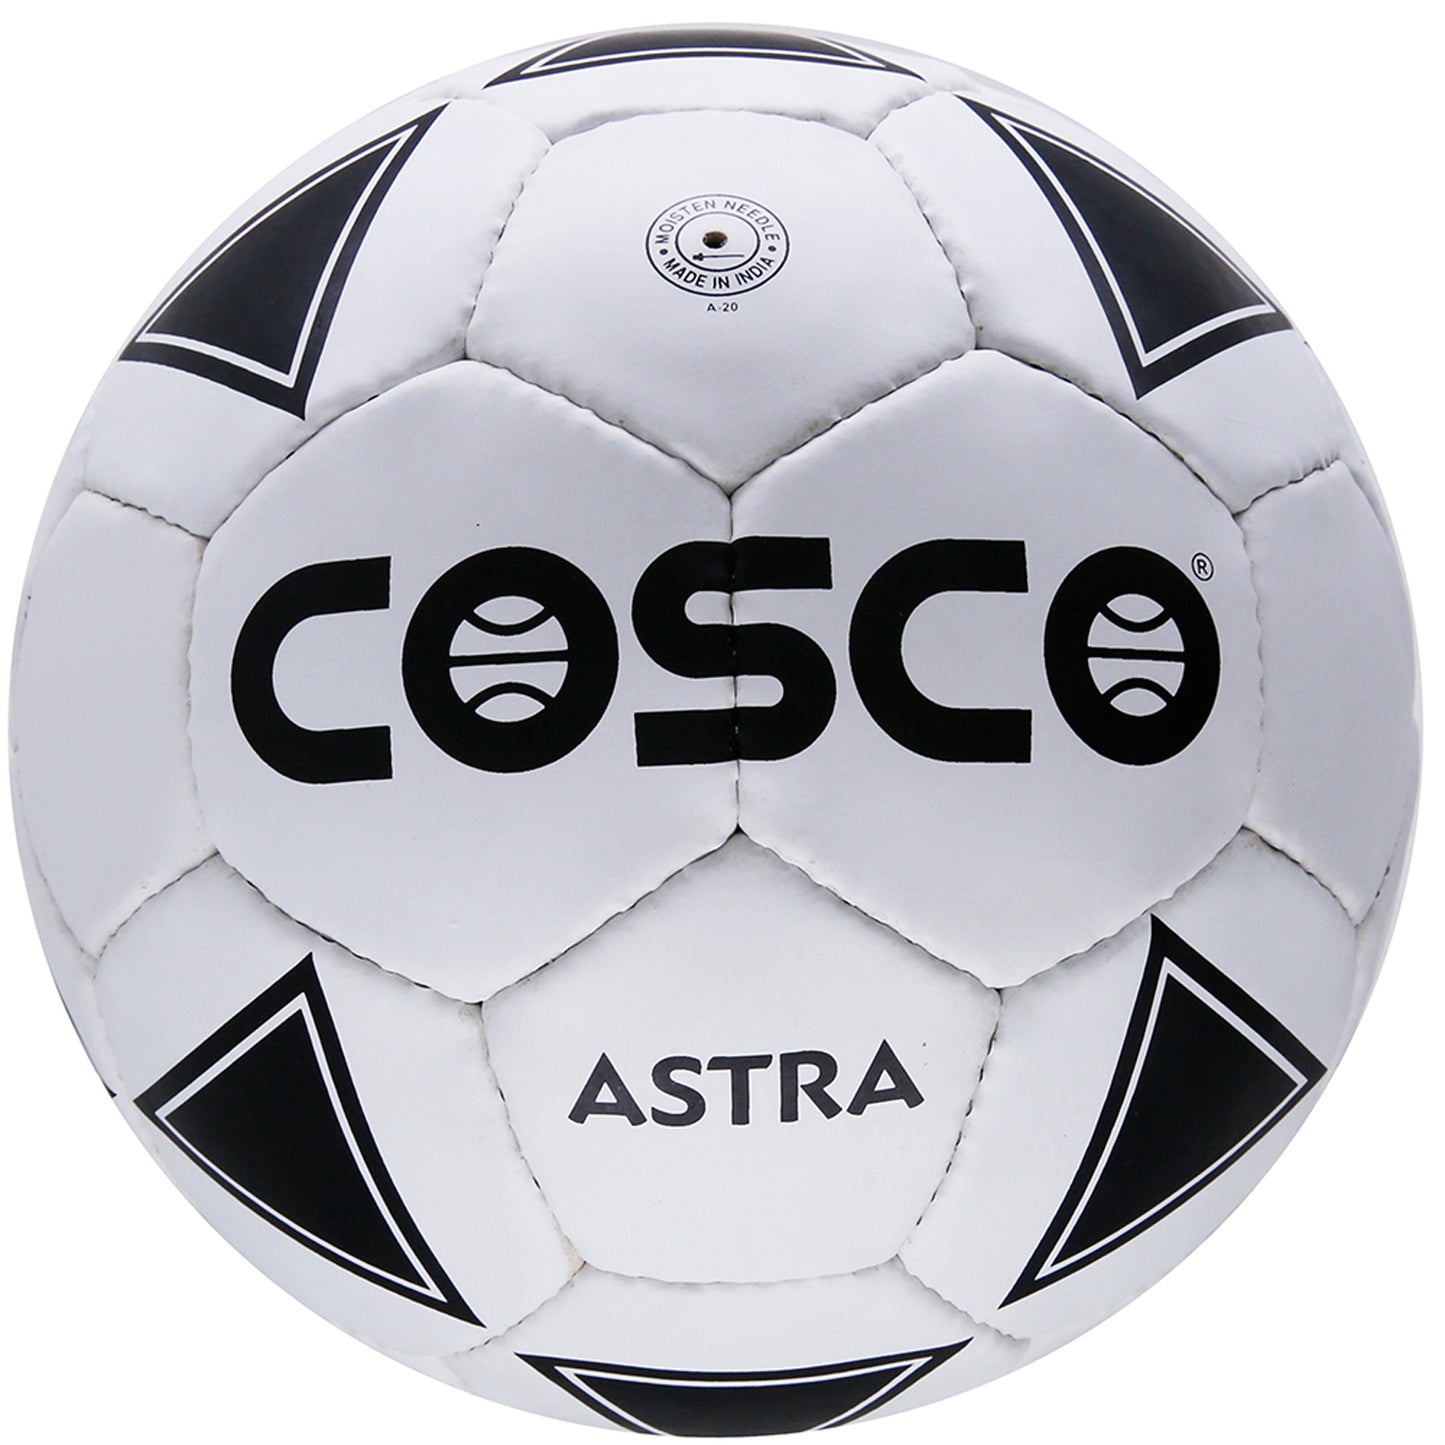 Cosco Astra Football , White/Black - Size 5 - Best Price online Prokicksports.com